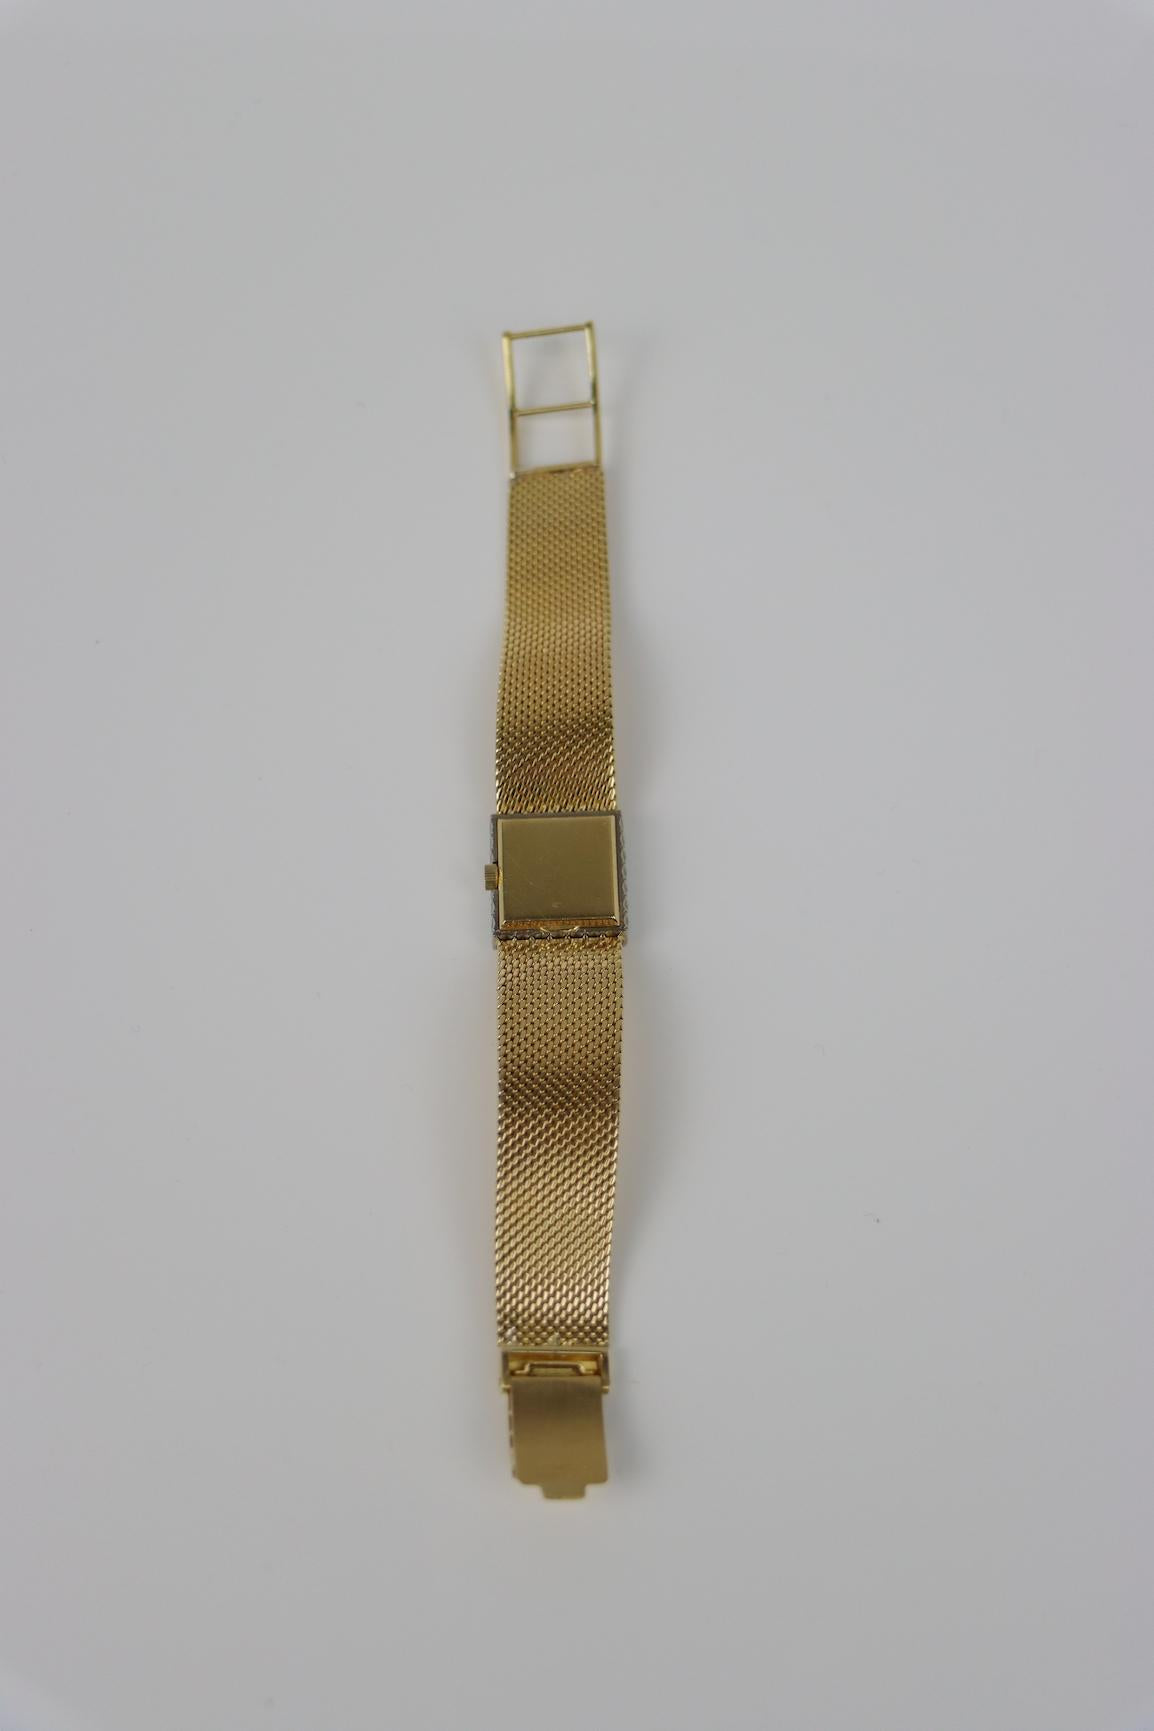 Patek Philippe 18K Gold Diamond Ladies Watch Bracelet